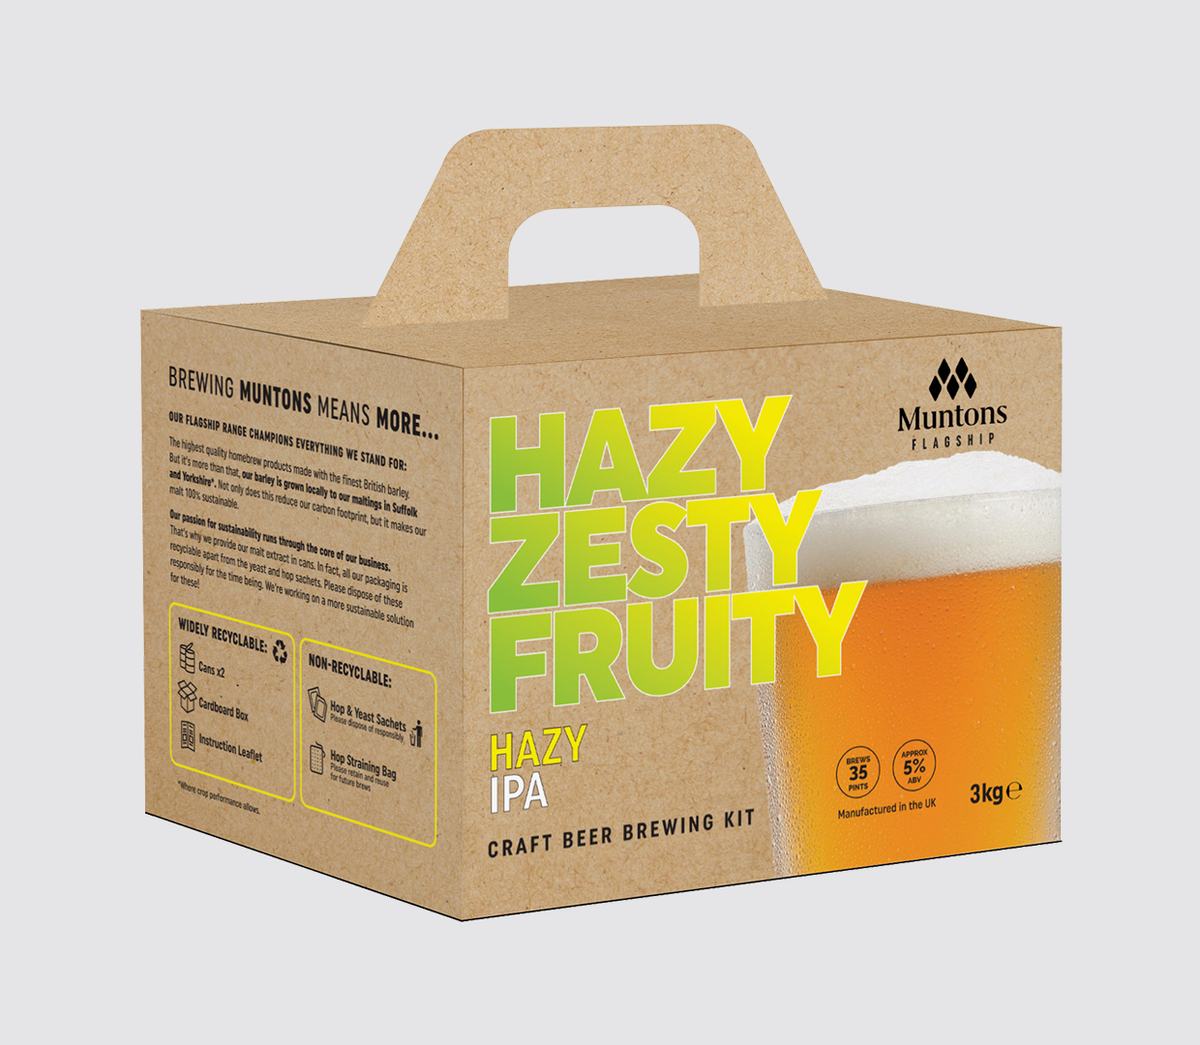 Muntons Flagship Range Hazy IPA - All Things Fermented | Home Brew Shop NZ | Supplies | Equipment